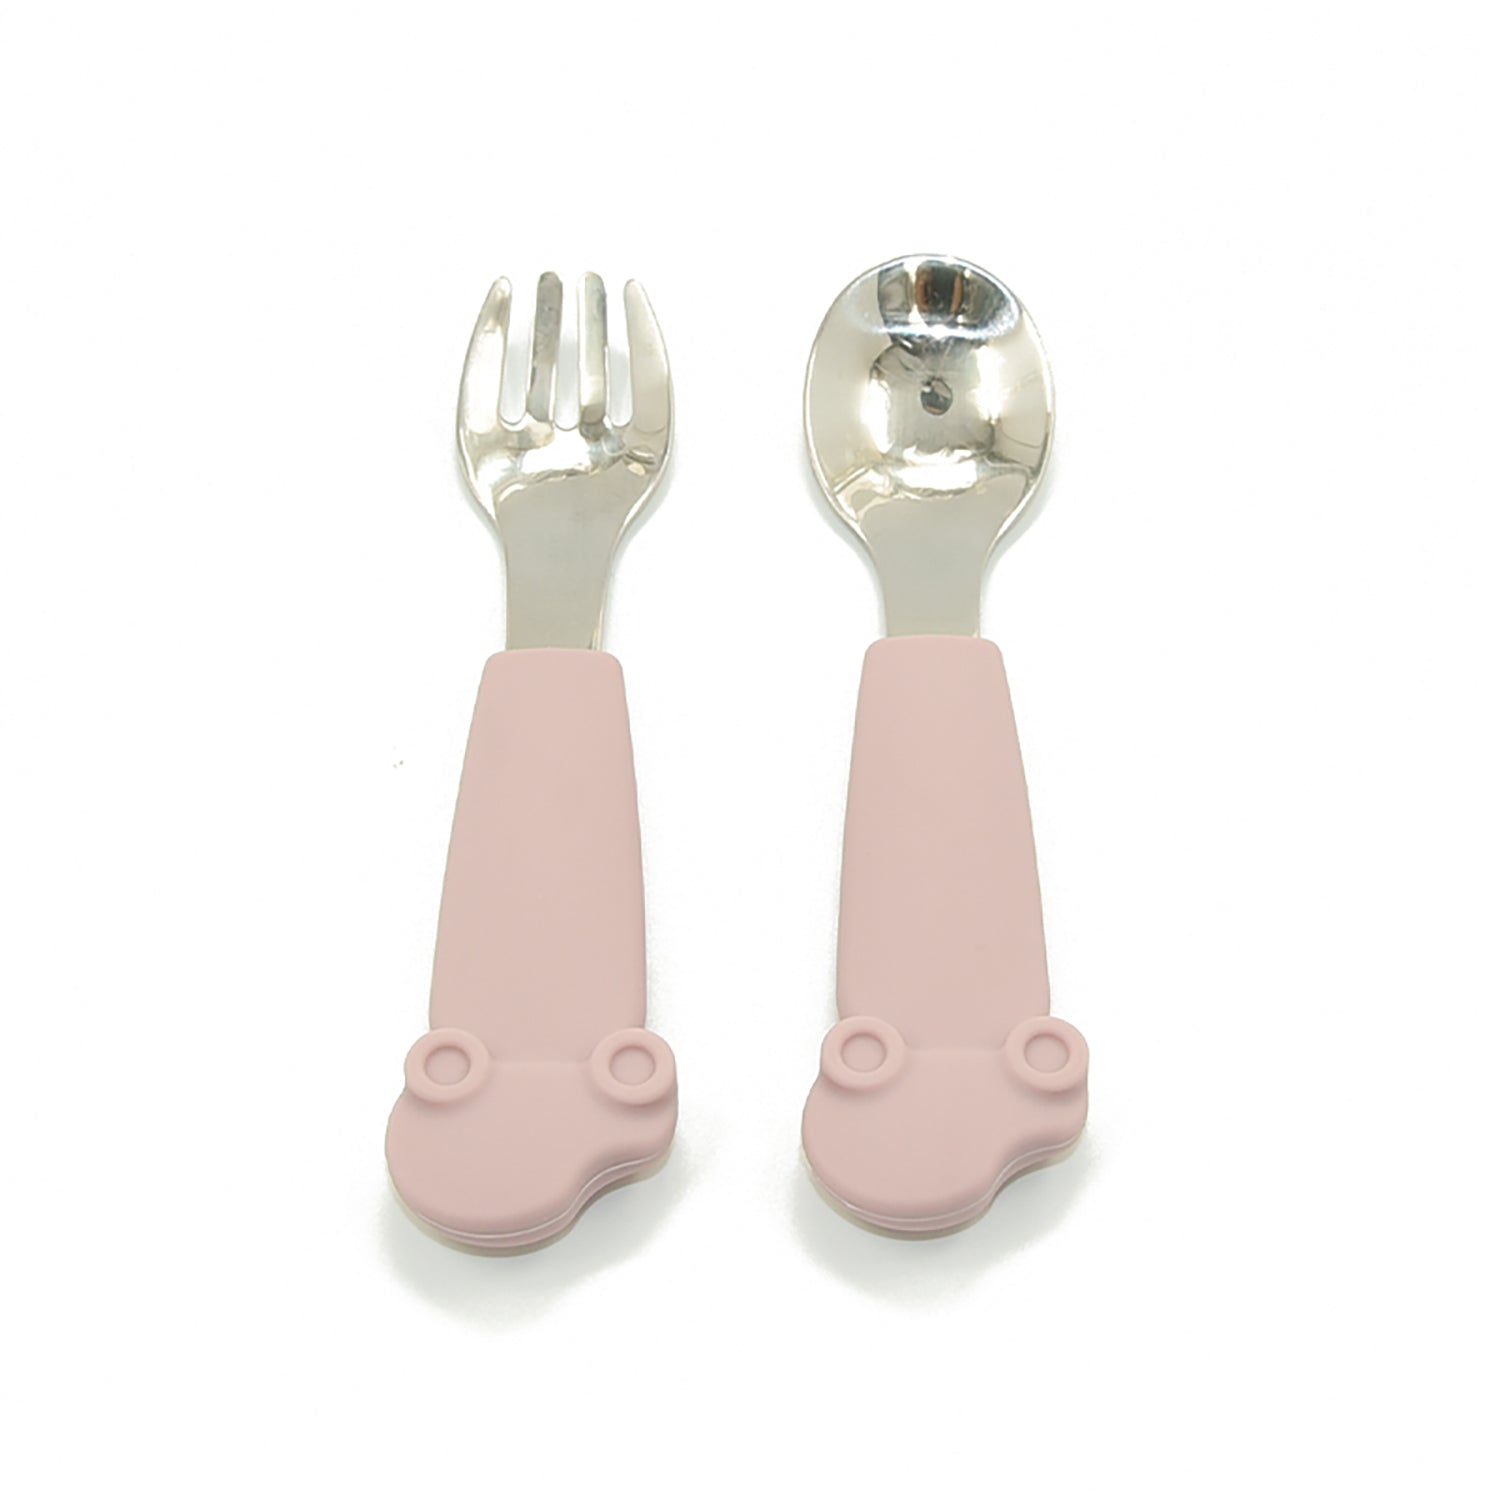 Allis Baby Fork & Spoon Set - Pink Car Design